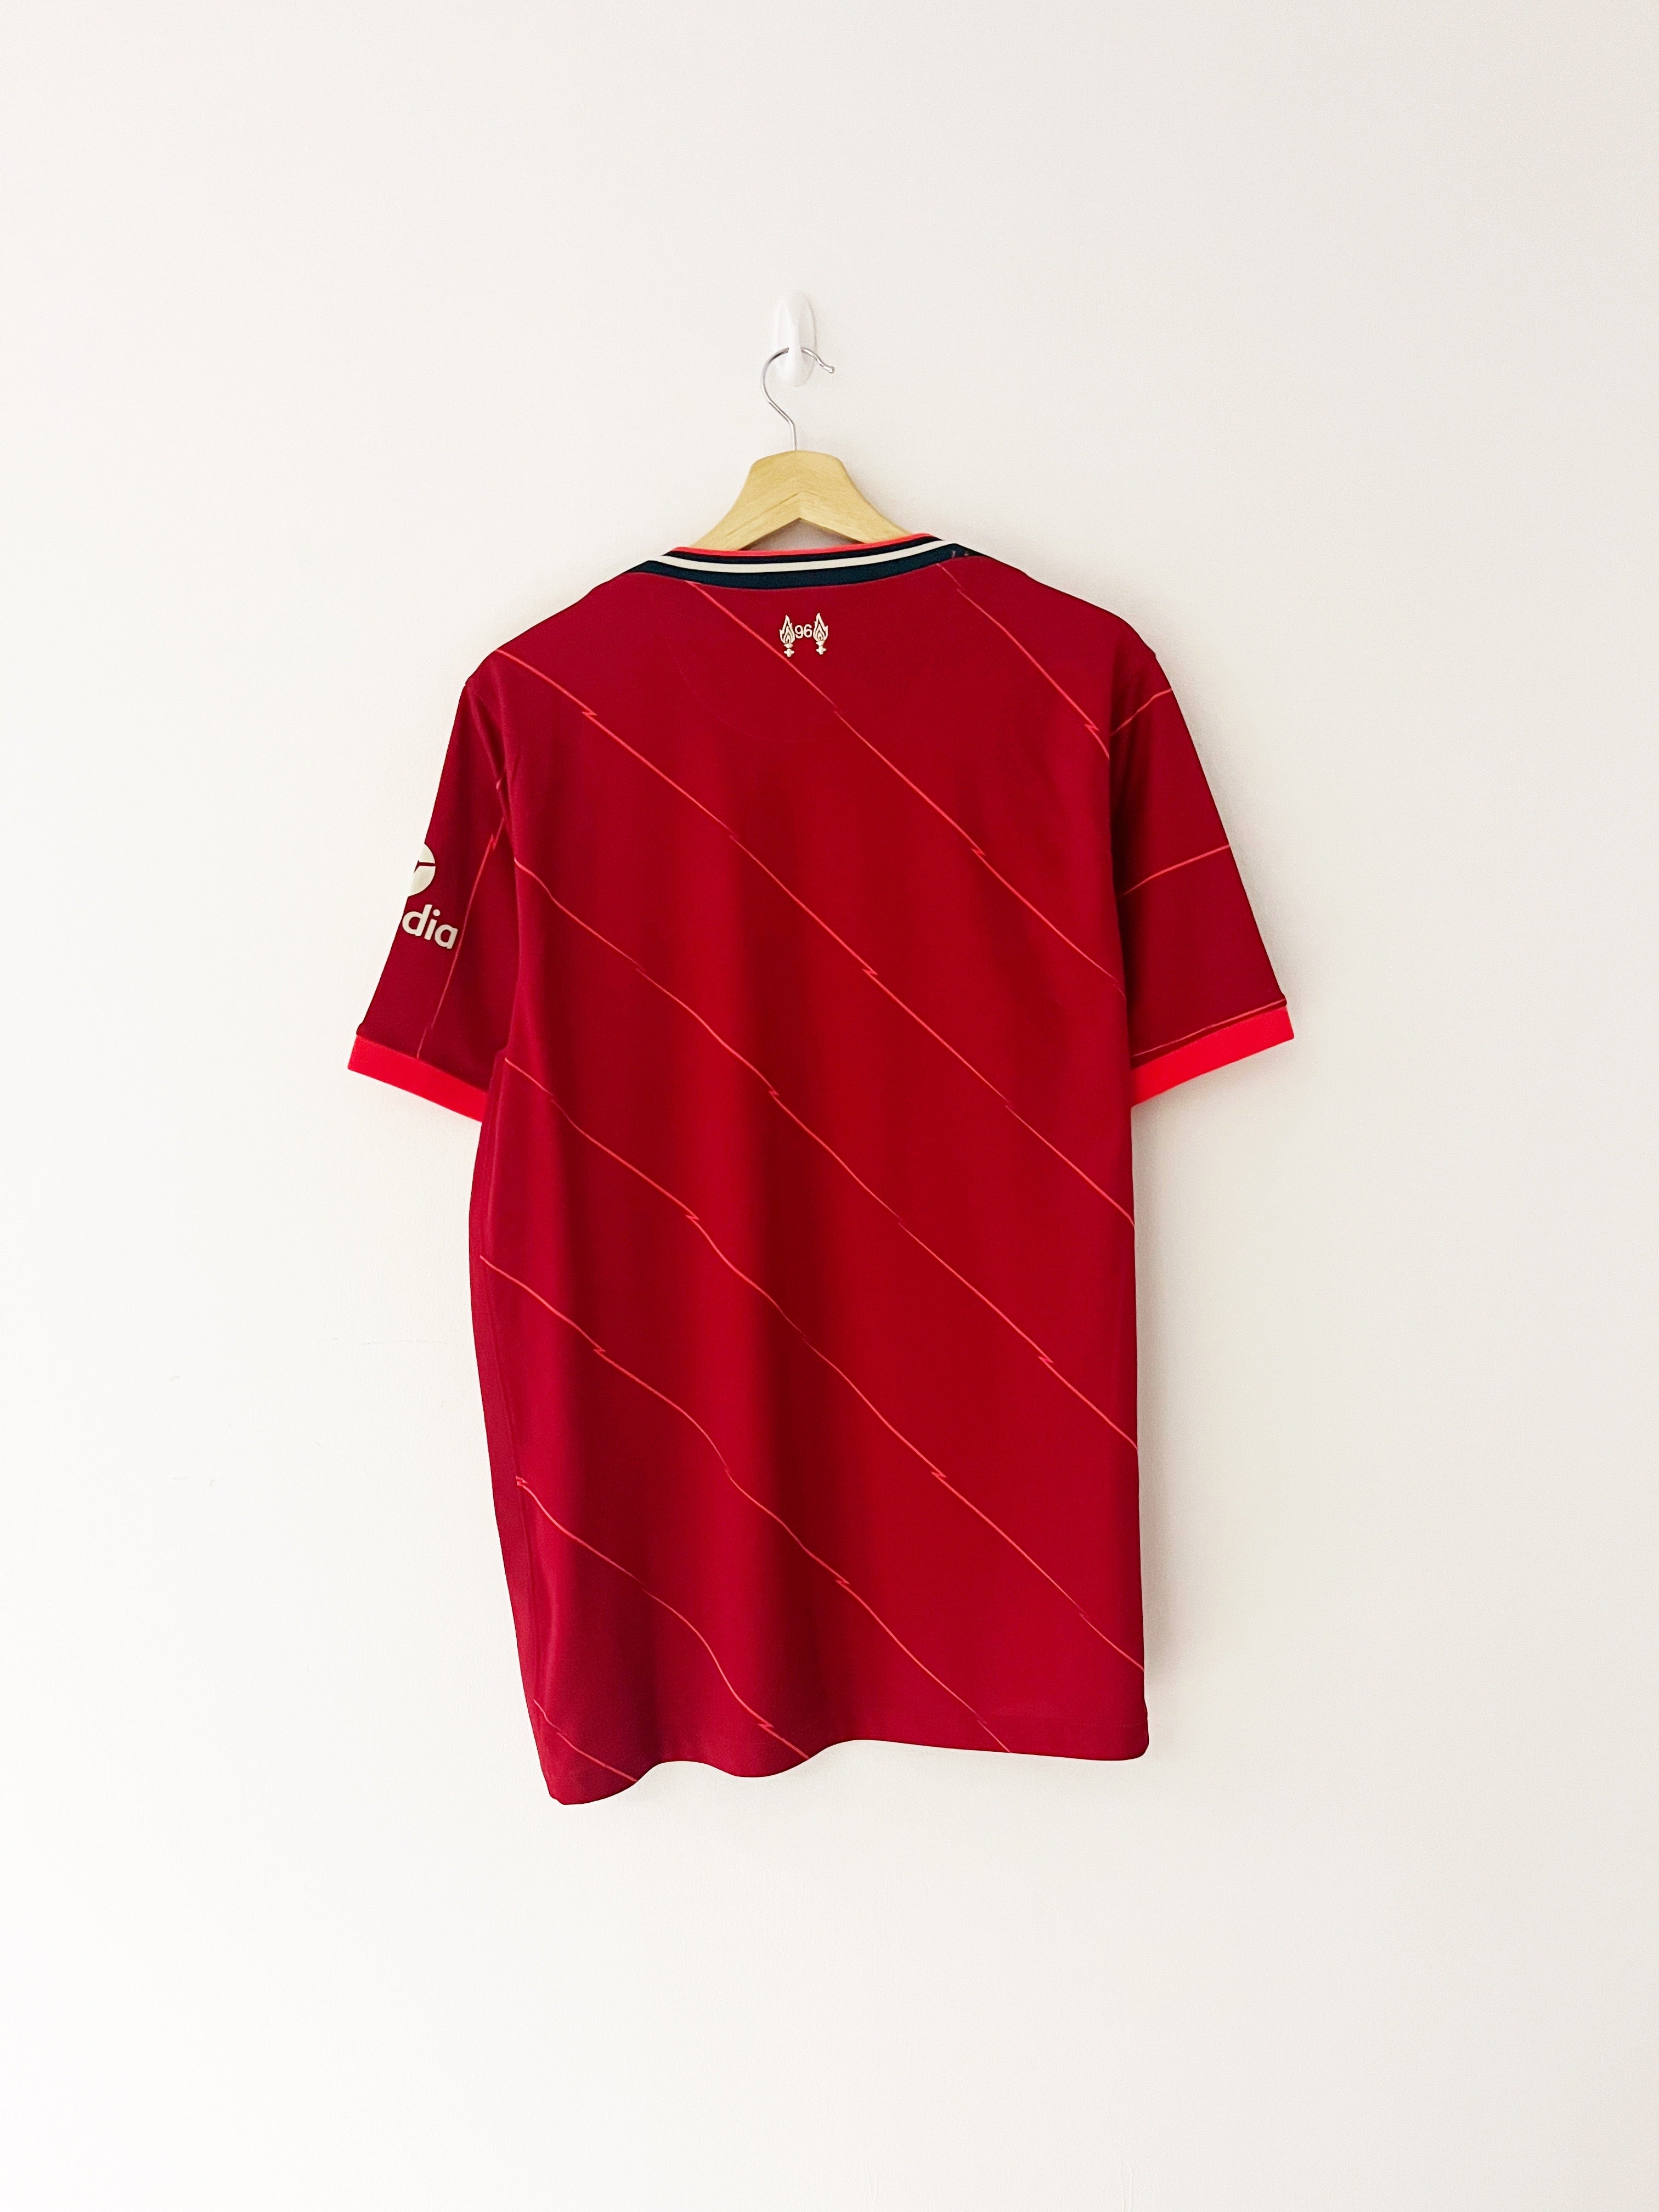 2021/22 Liverpool Home Shirt (L) 9/10